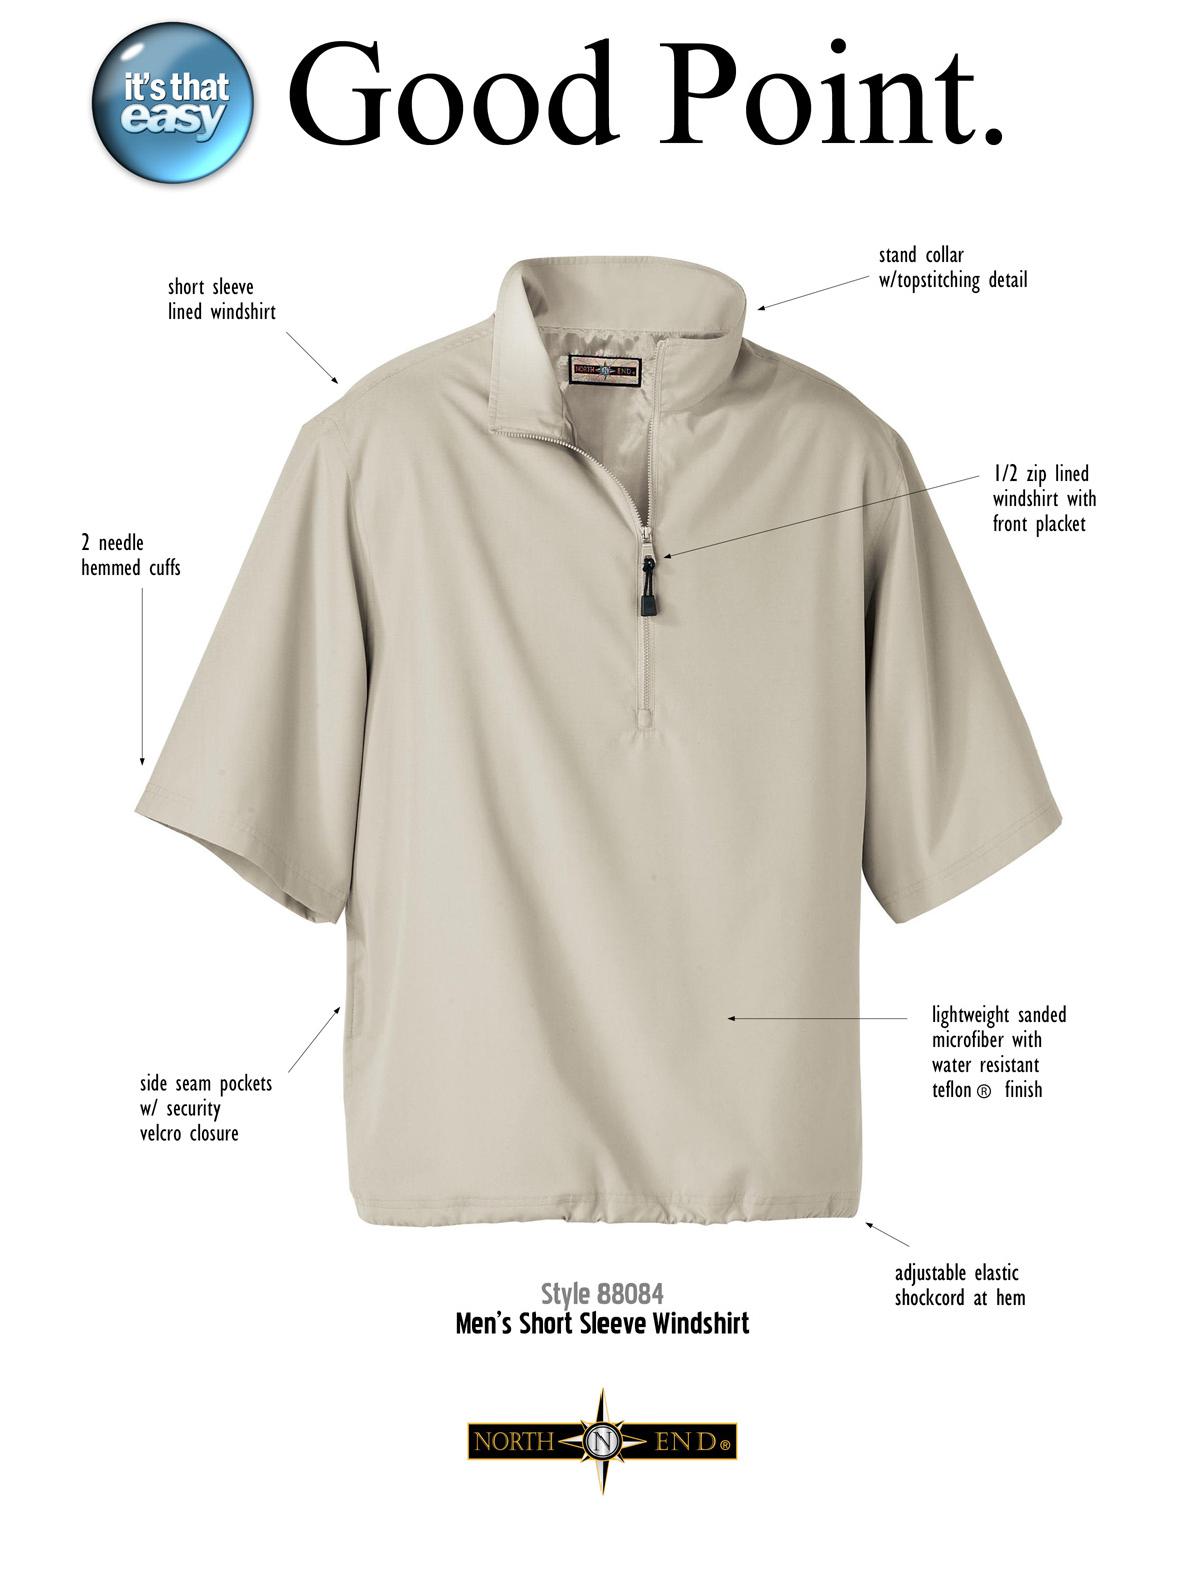 Ash City Windshirts 88084 - Men's Micro Plus Short Sleeve Windshirt With Teflon